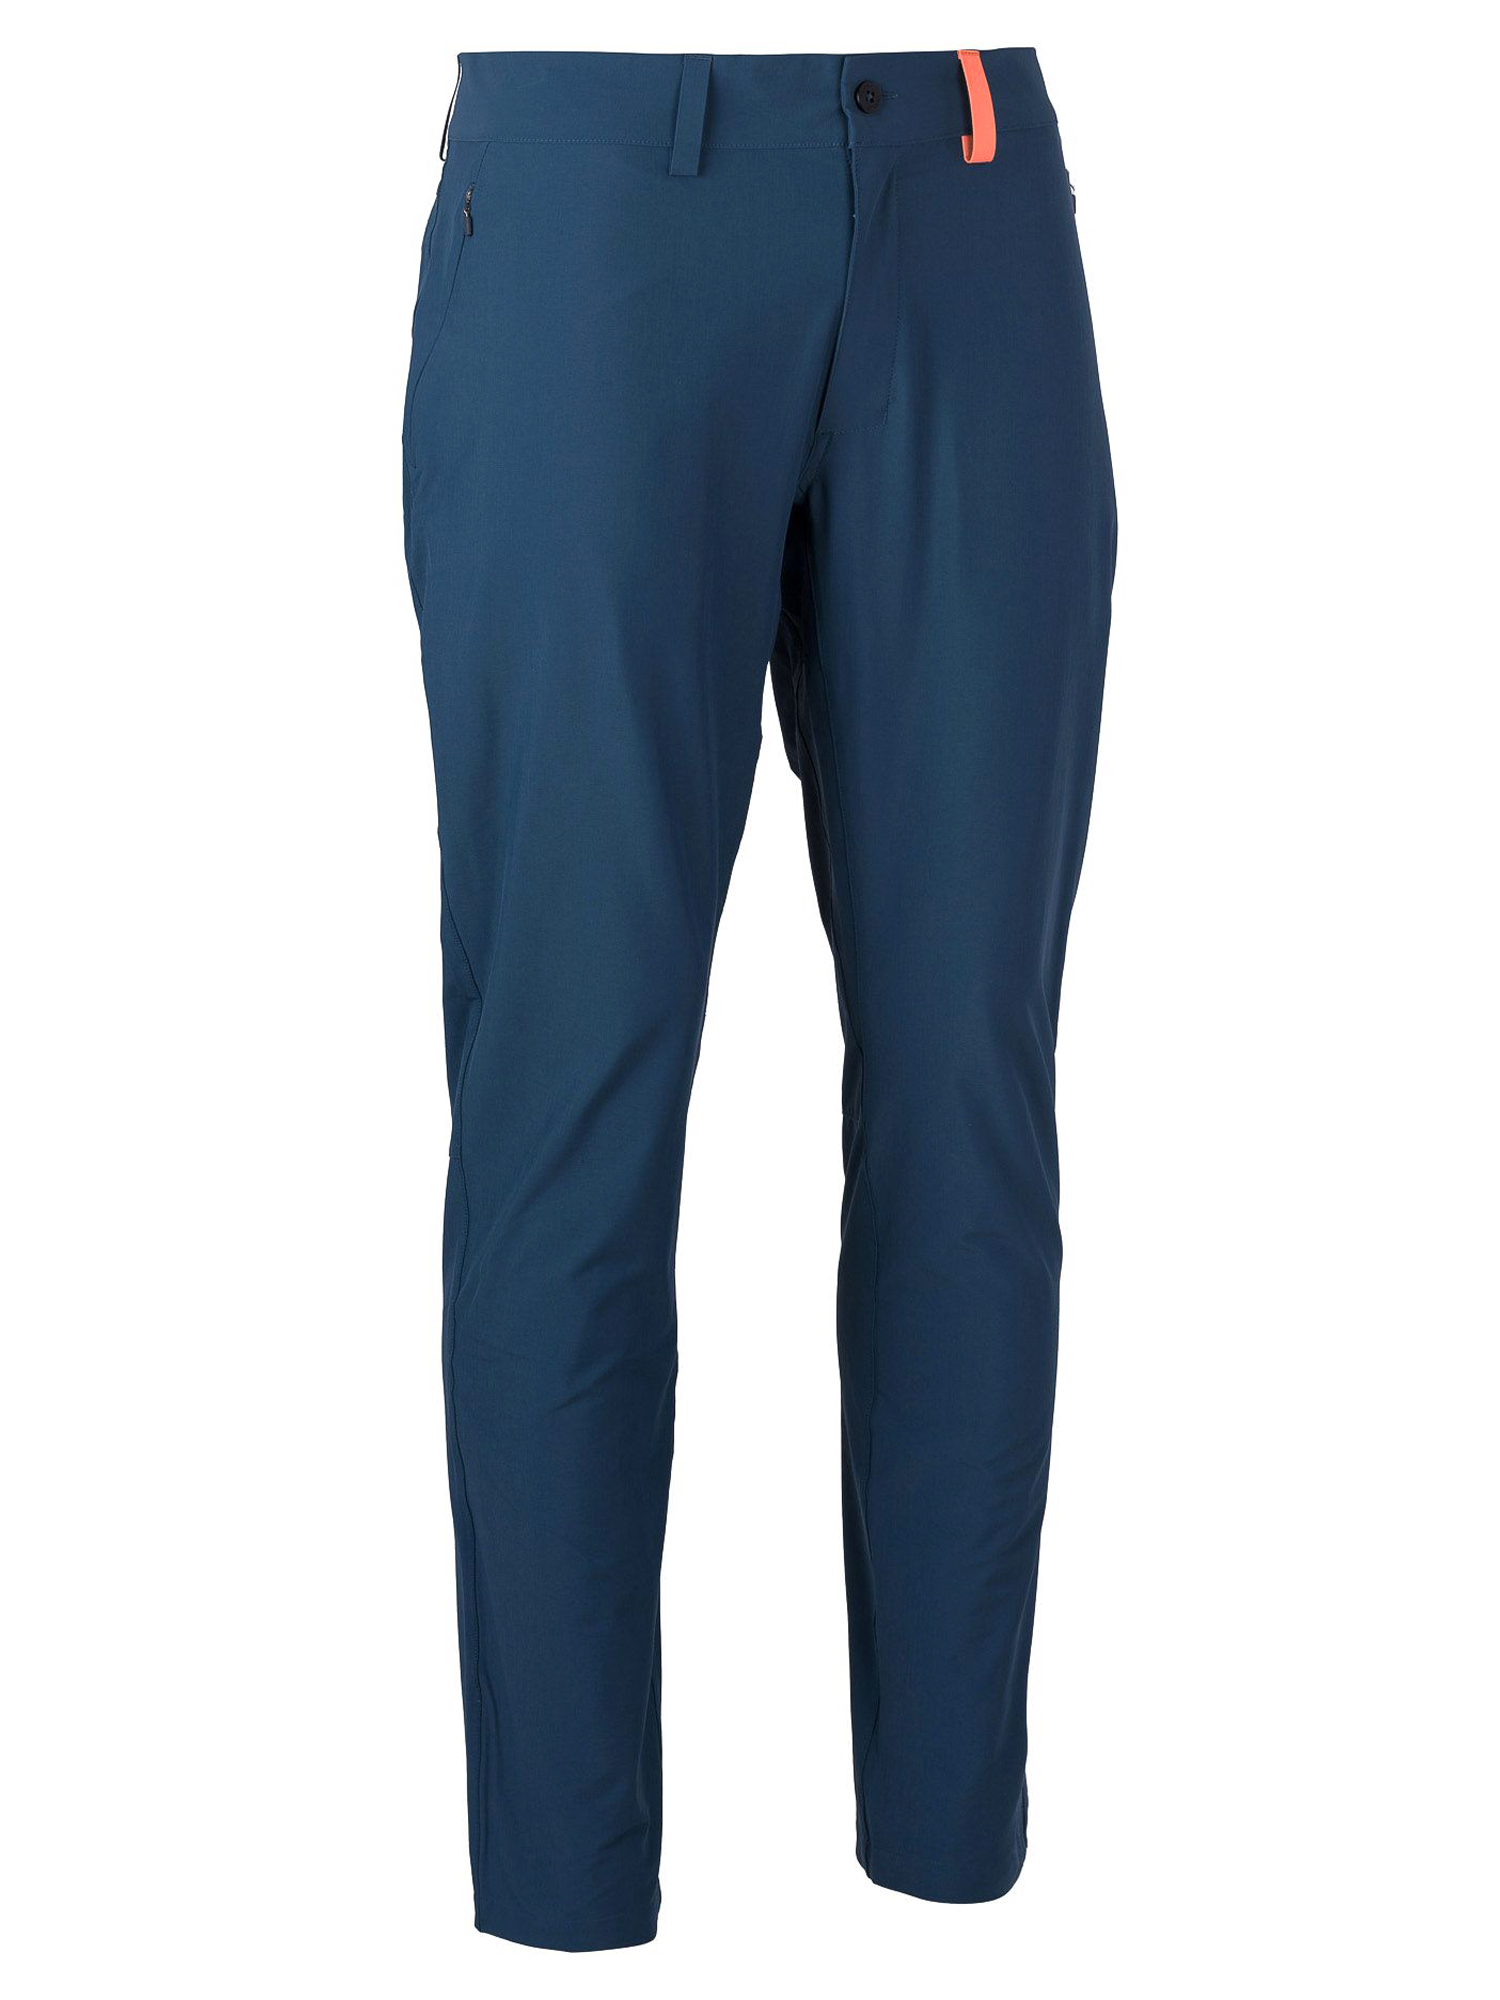 Спортивные брюки мужские Ternua Terra Pt M синие M